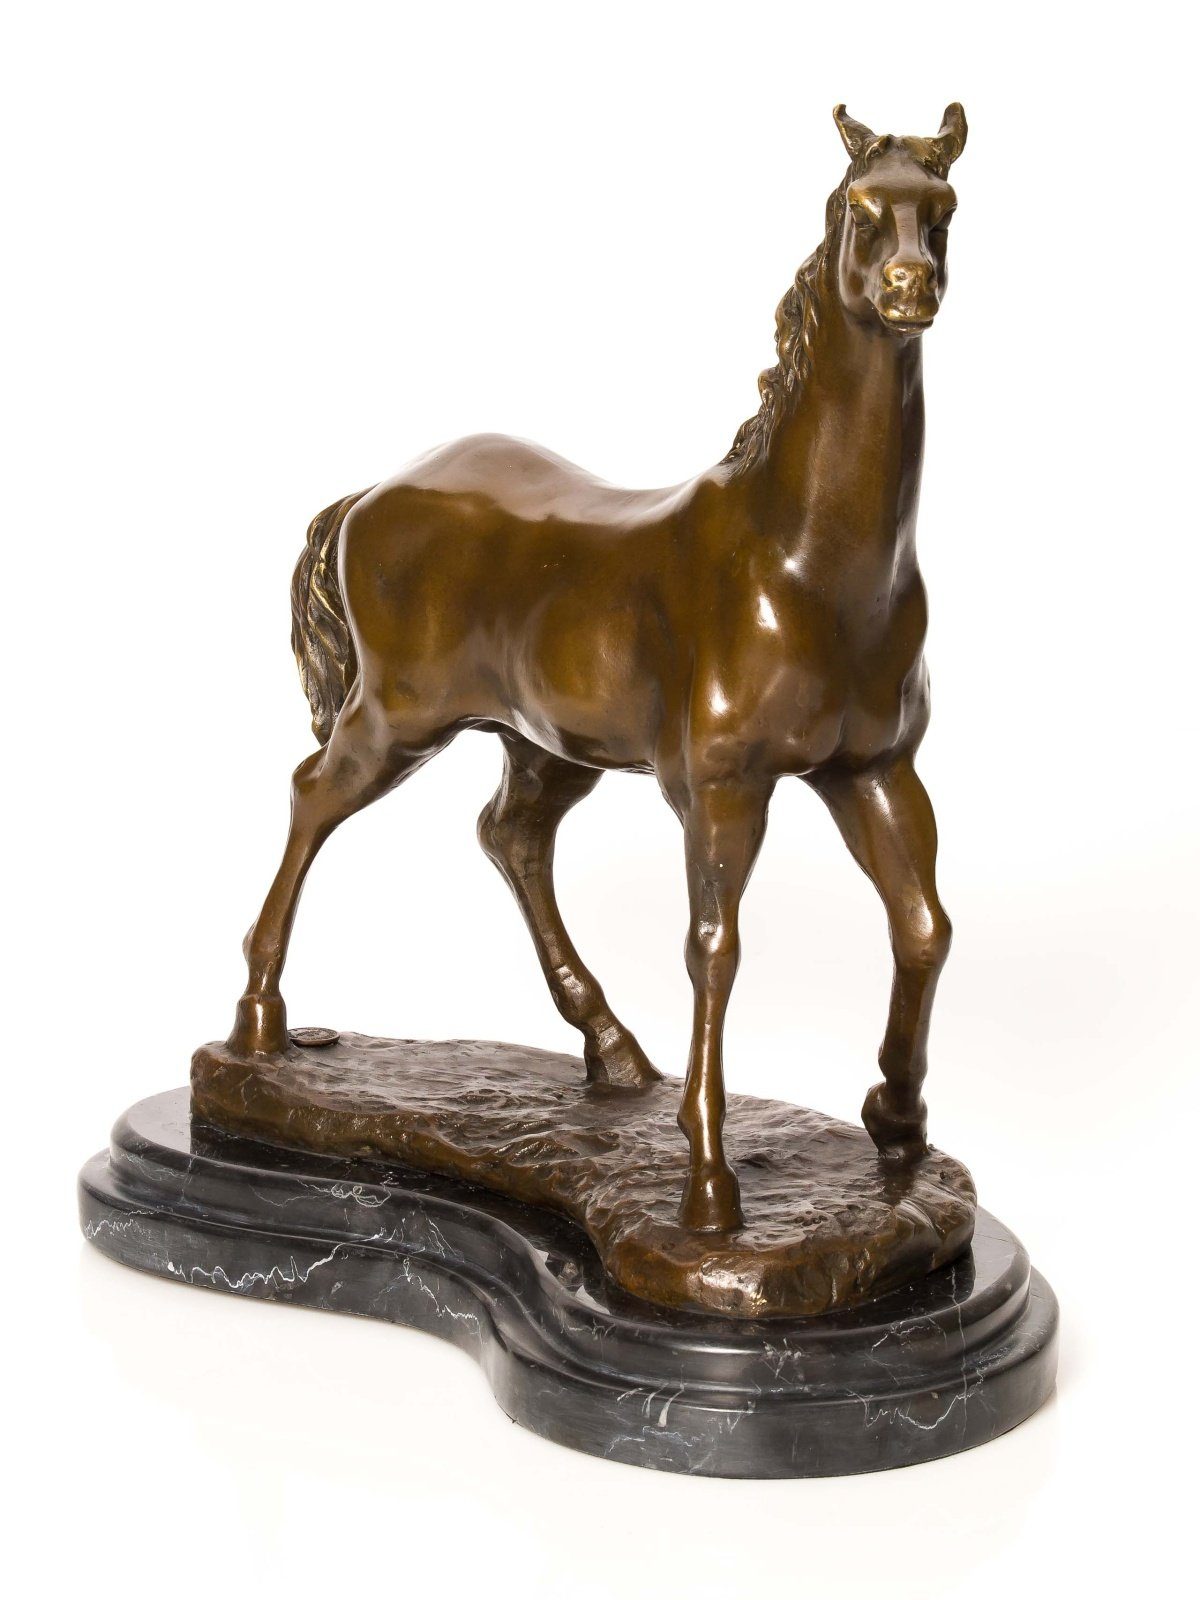 Aubaho Skulptur Bronzeskulptur Bronze Antik-Stil 32cm Skulptur Statue Figur Pferd 6kg